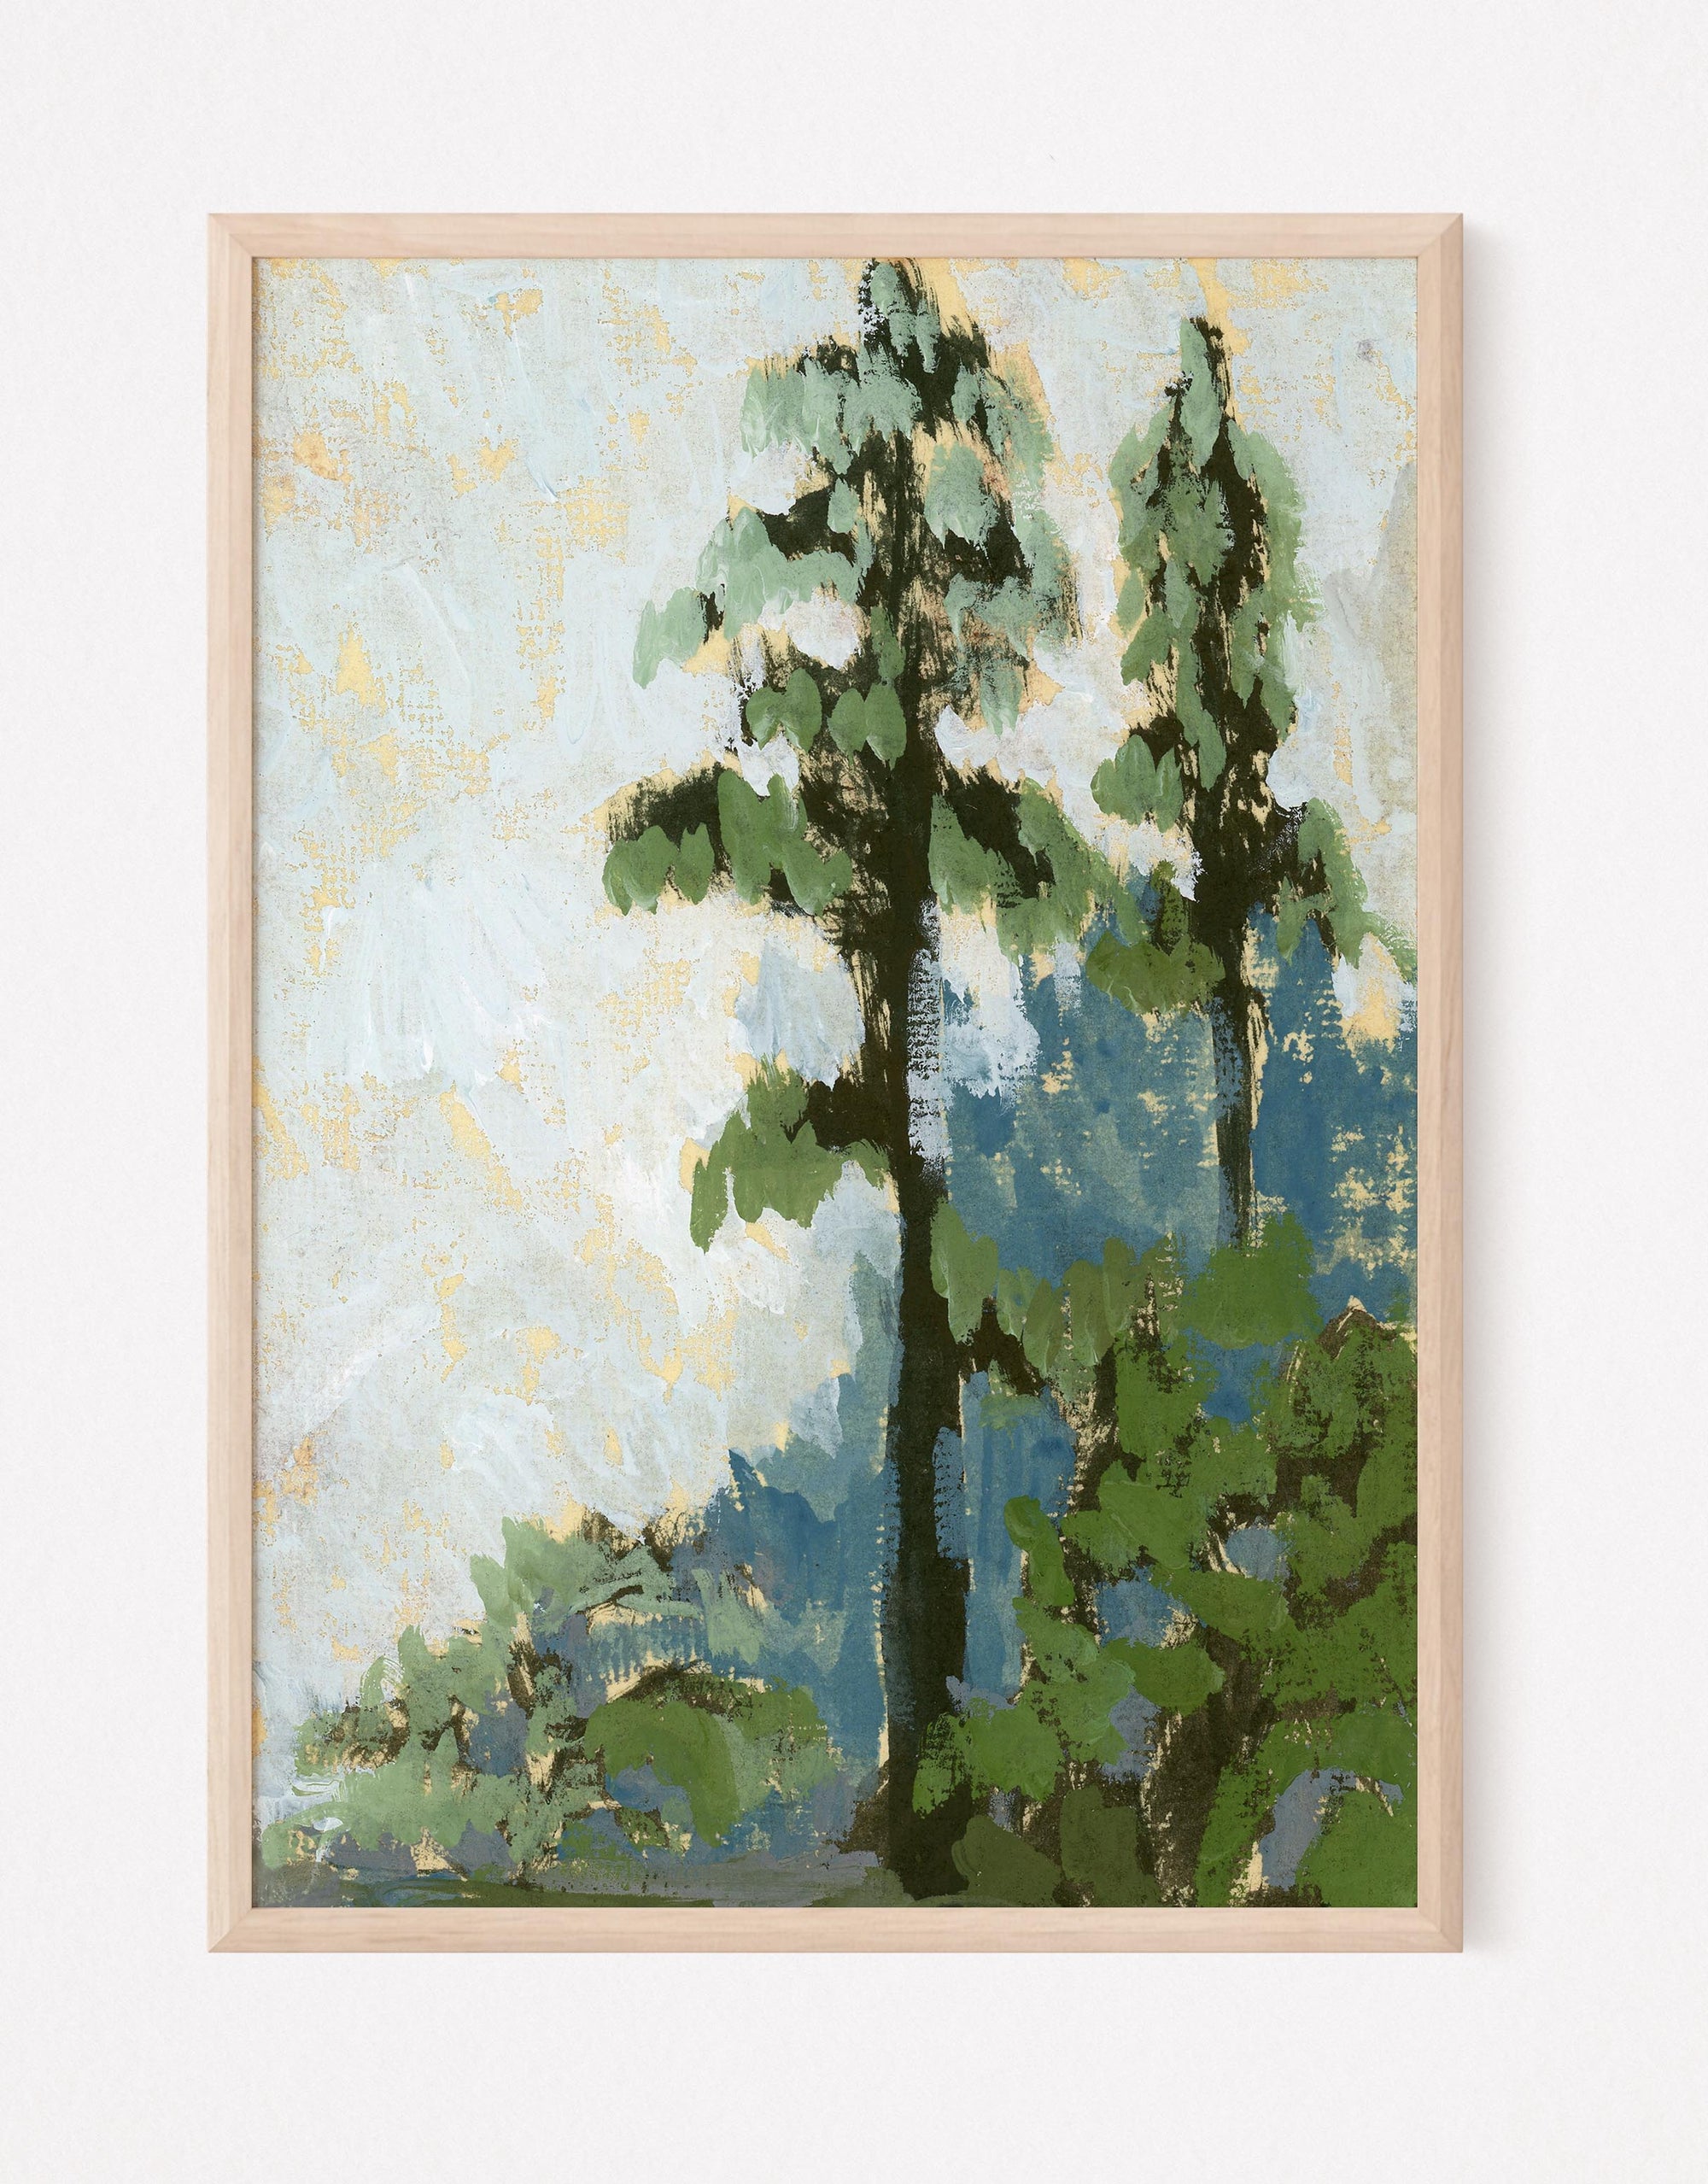 Georgia Pine, a Vertical Print